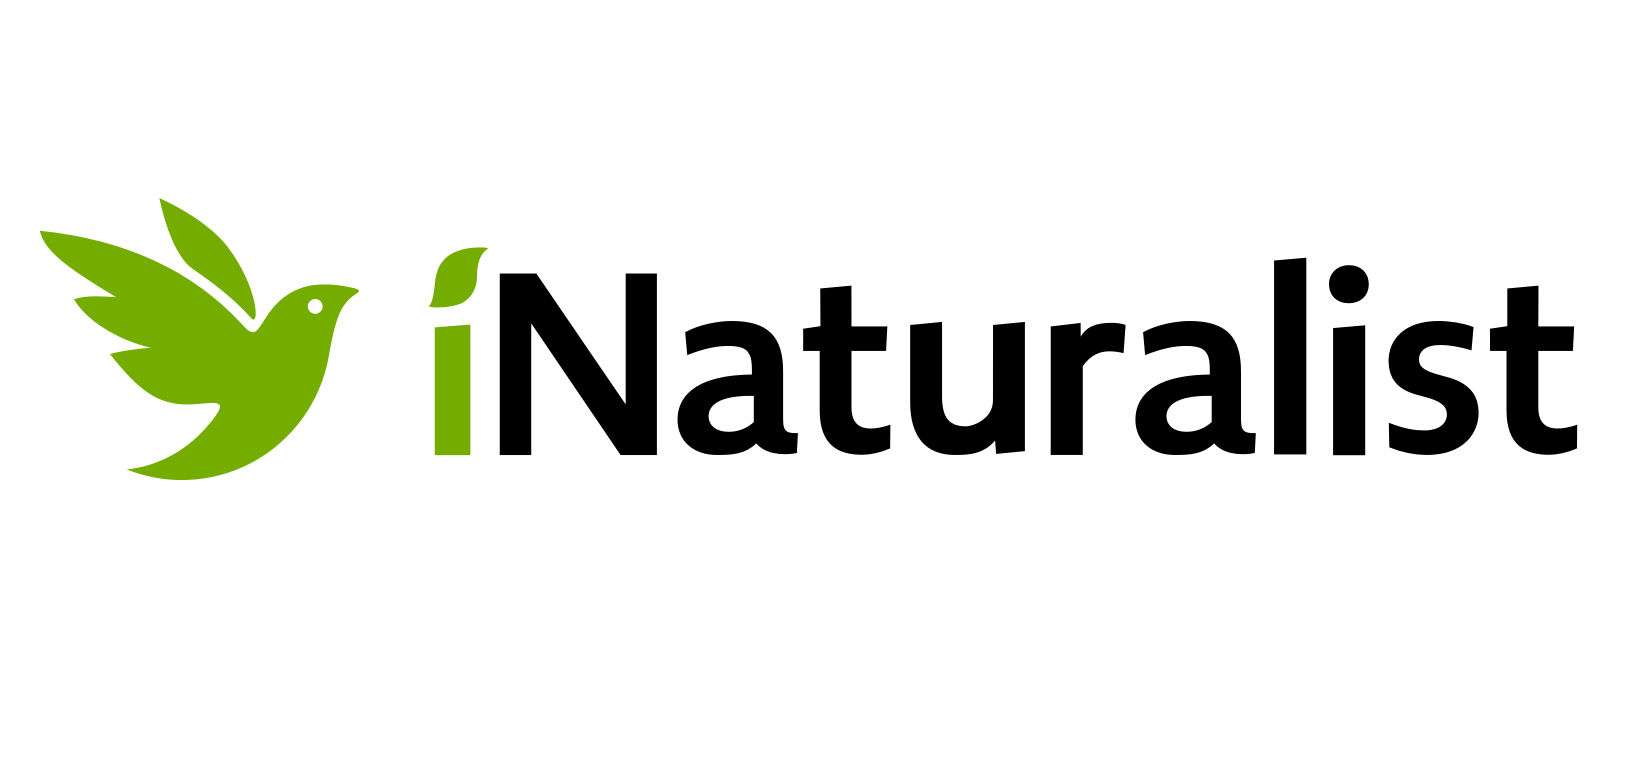 INATURALIST. INATURALIST натуралист. Натуралист логотип. Лого INATURALIST, Planetnet.